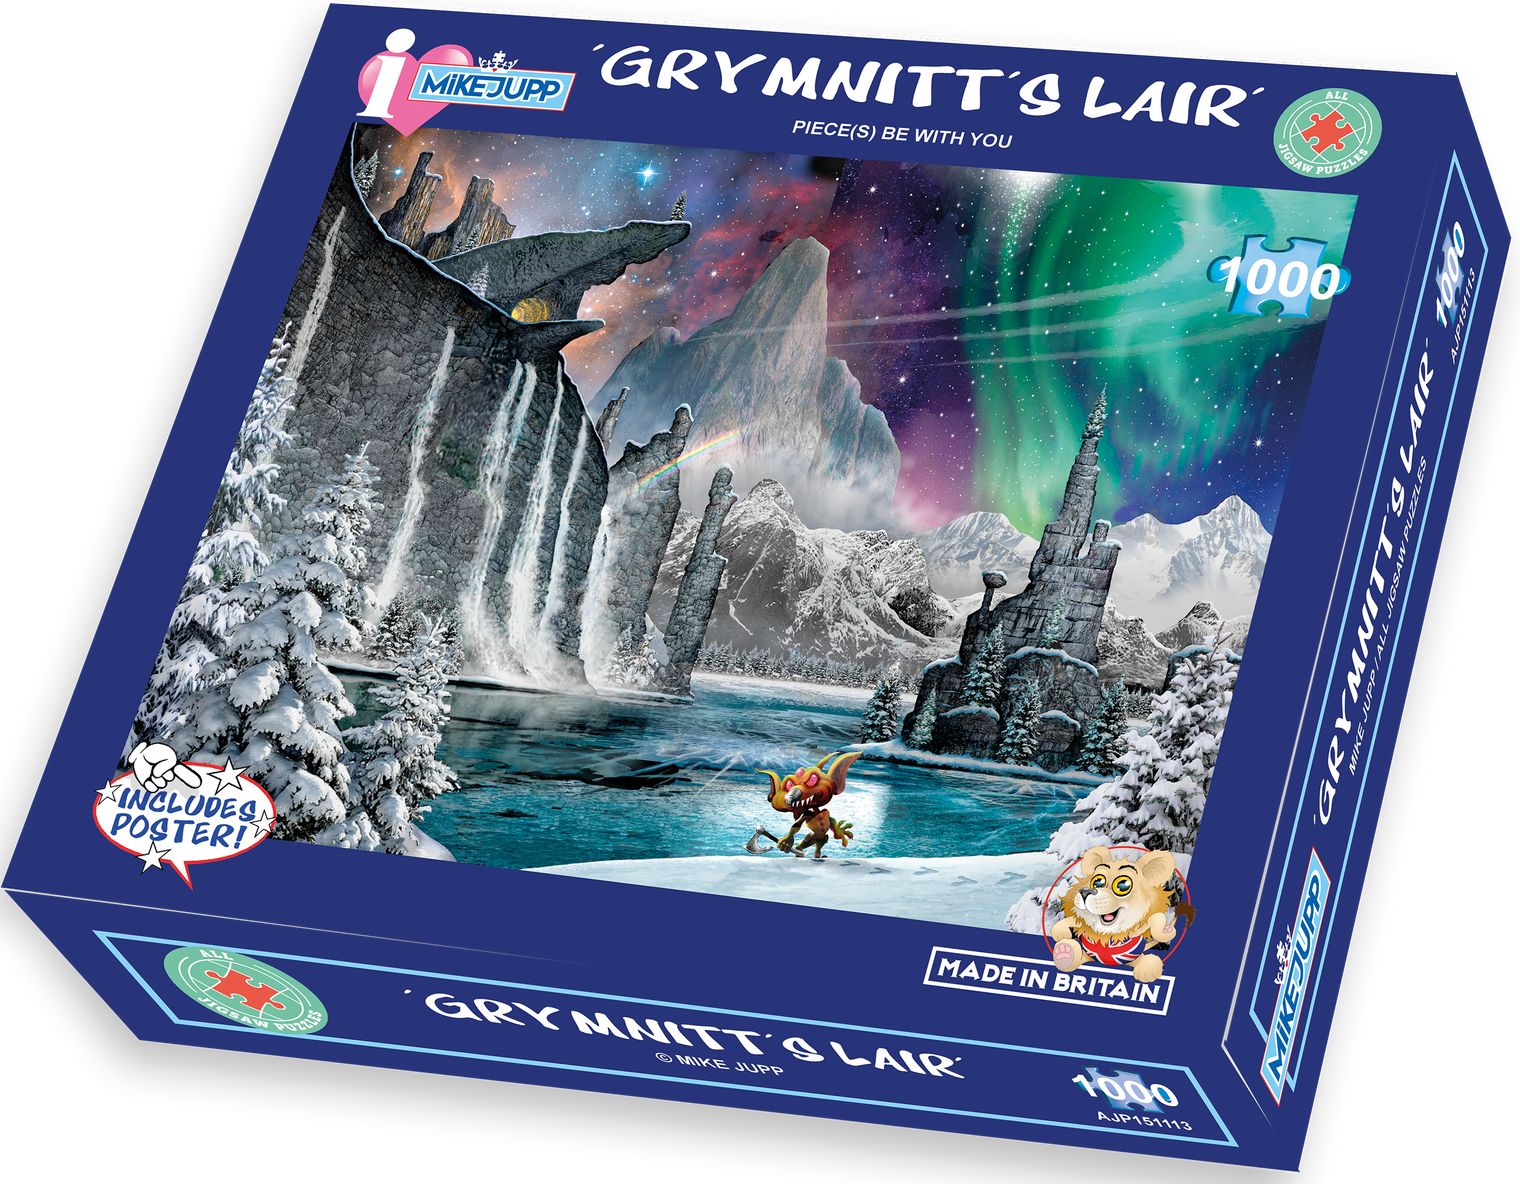 Grymnitt’s Lair (Wormberry Jam) Fantasy Jigsaw Puzzle